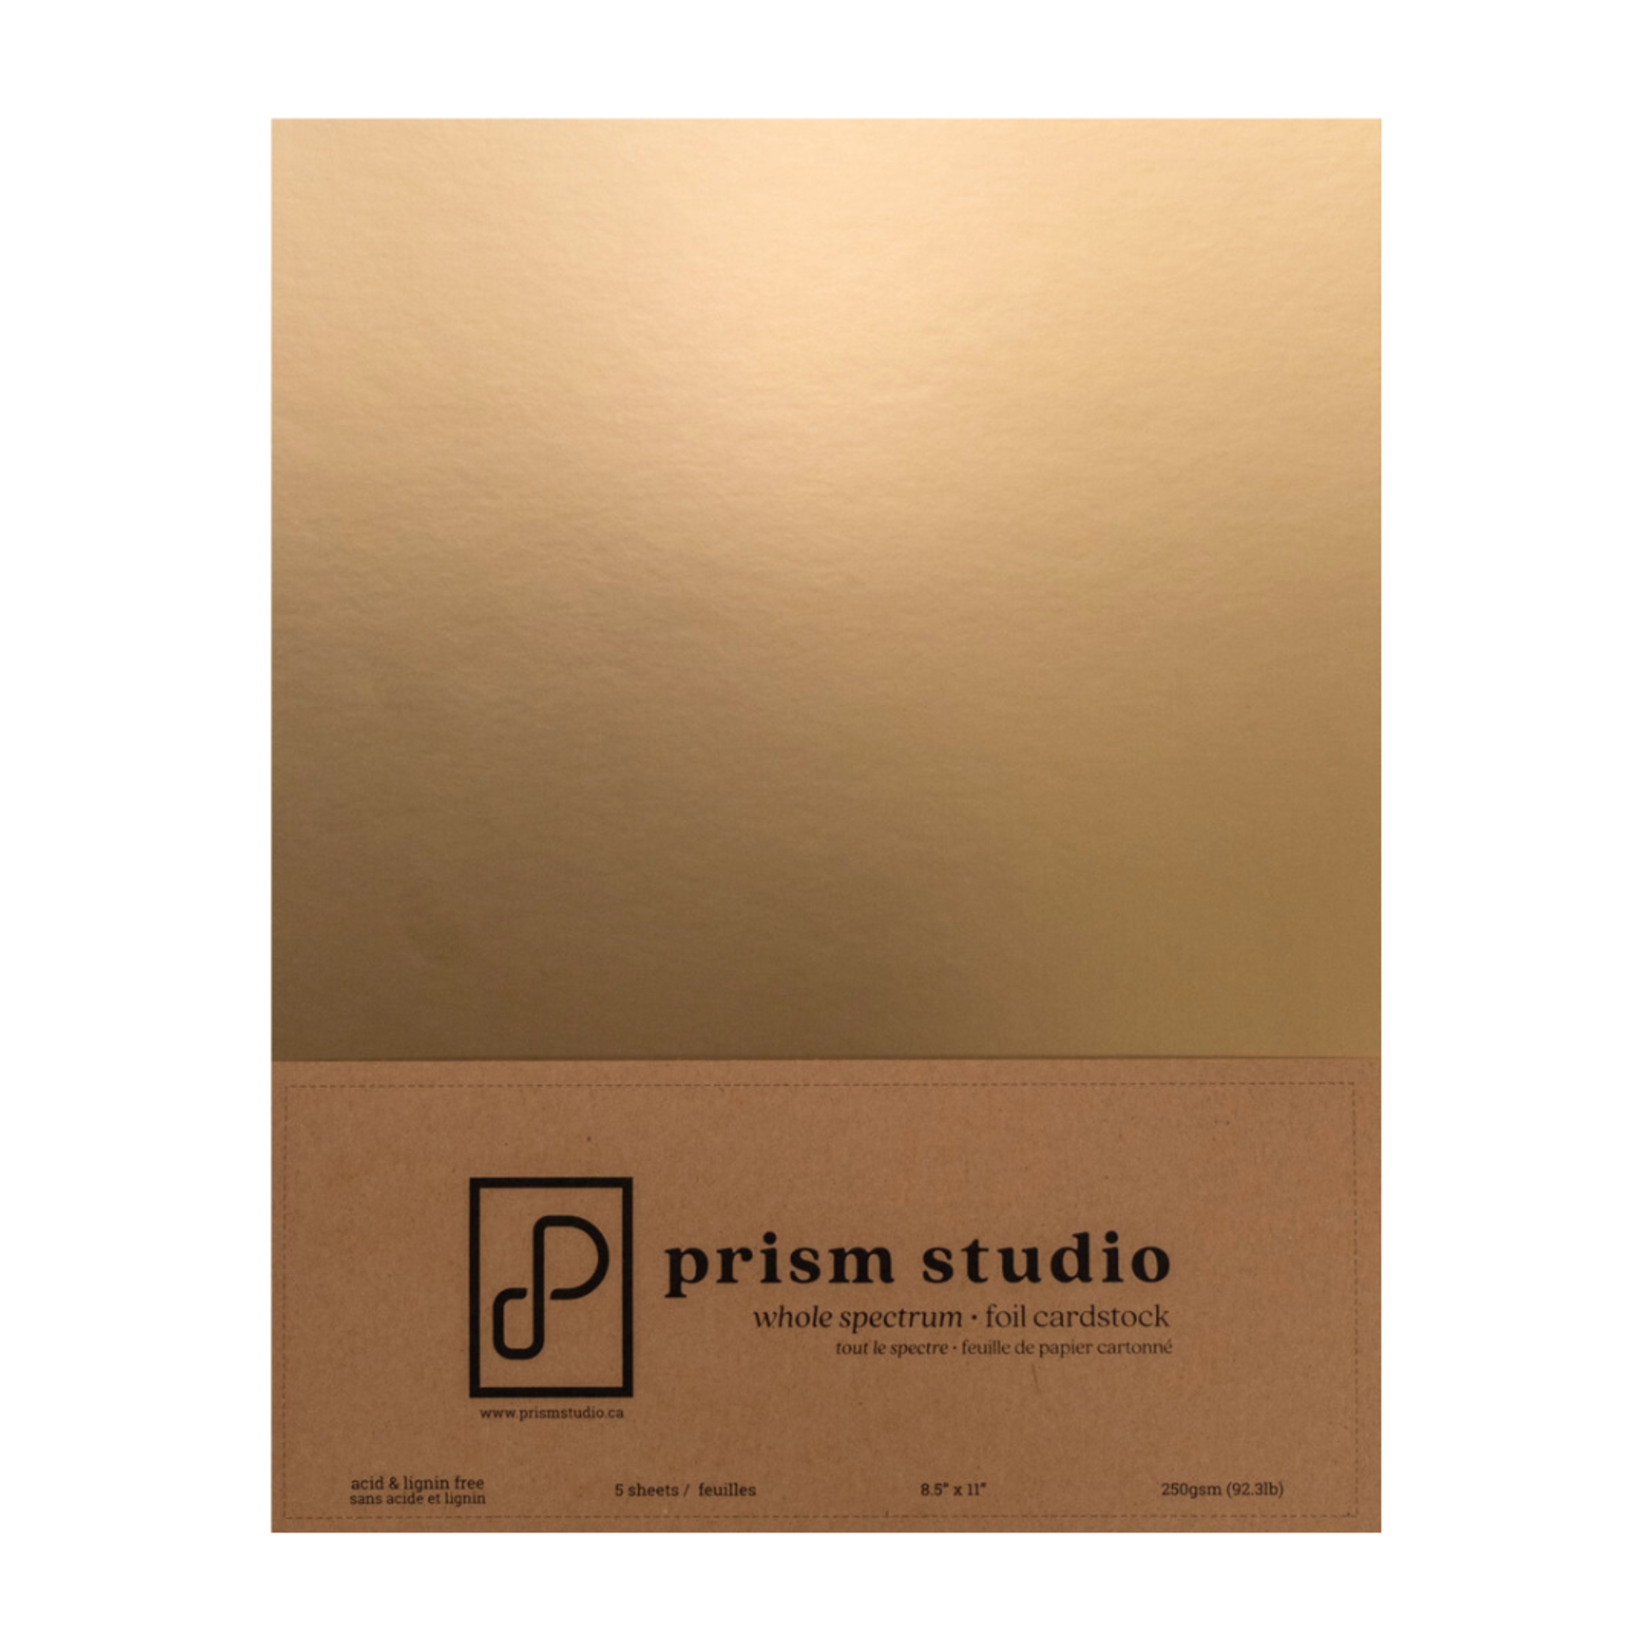 PRISM STUDIO PRISM STUDIO WHOLE SPECTRUM FOIL CARDSTOCK 8.5X11 BRUSHED GOLD